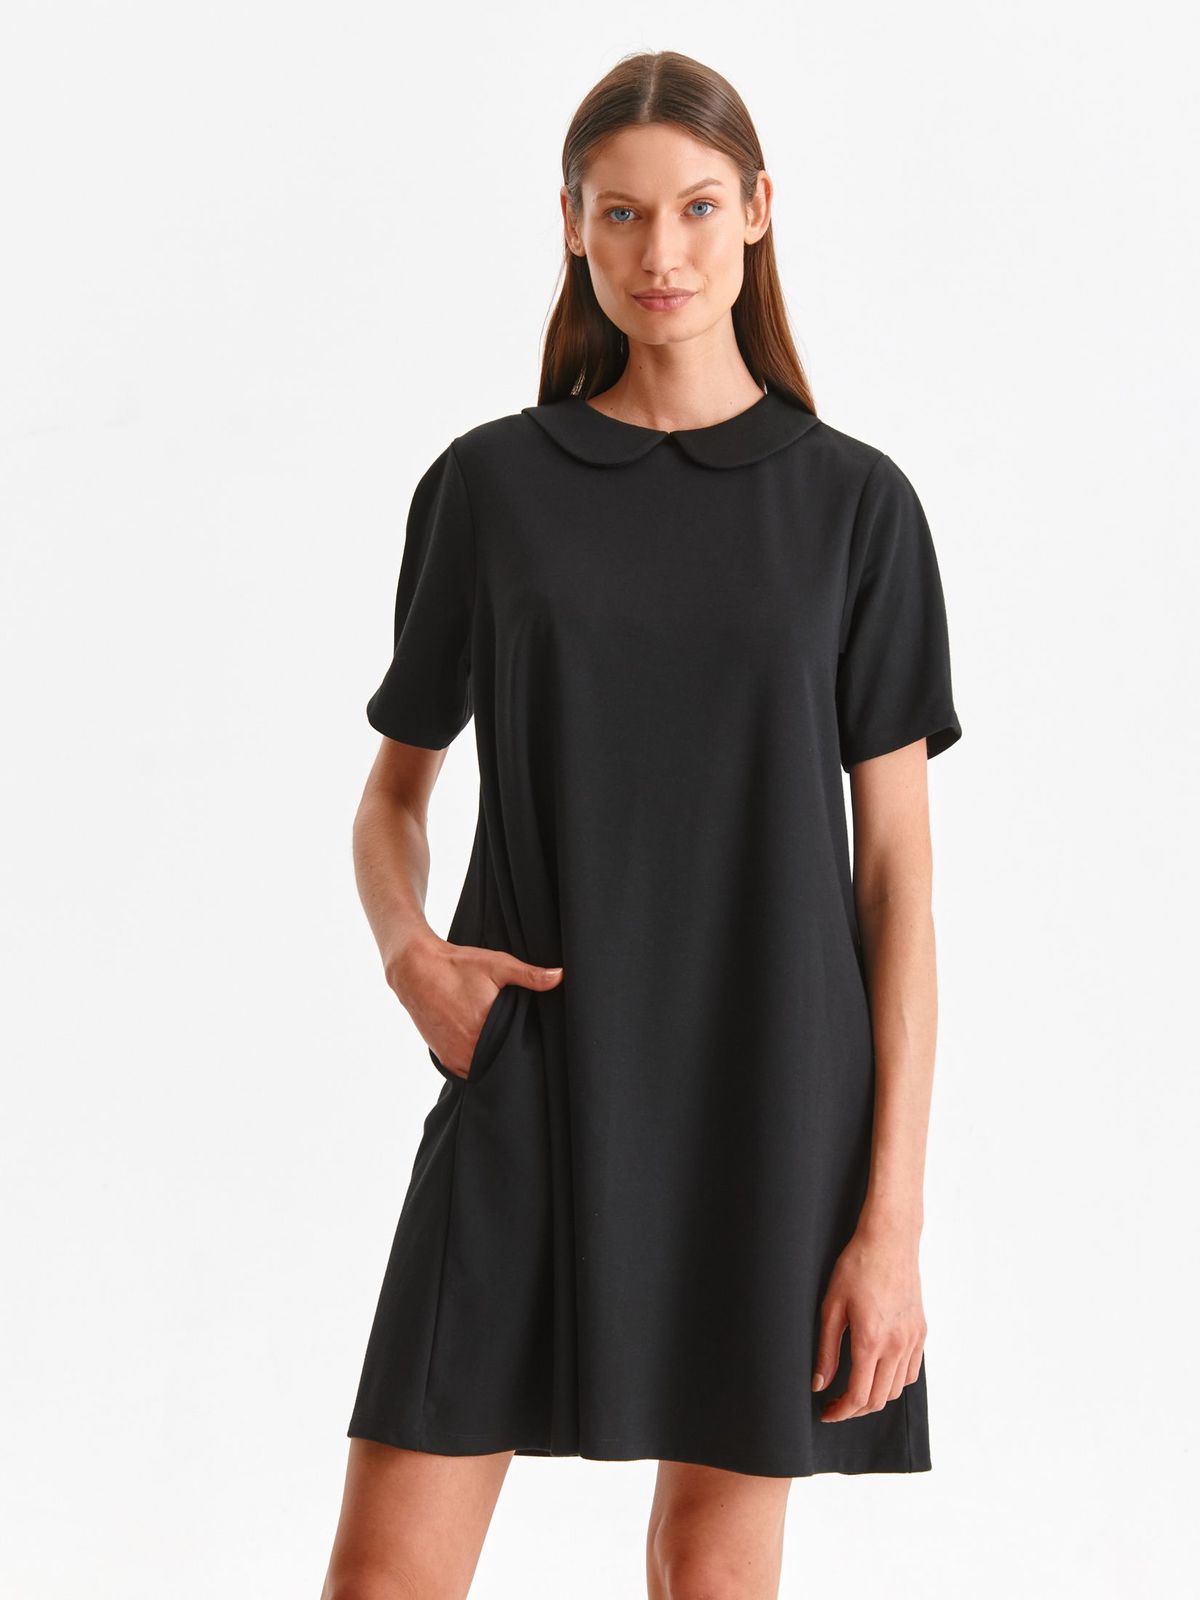 Black dress thin fabric short cut a-line lateral pockets